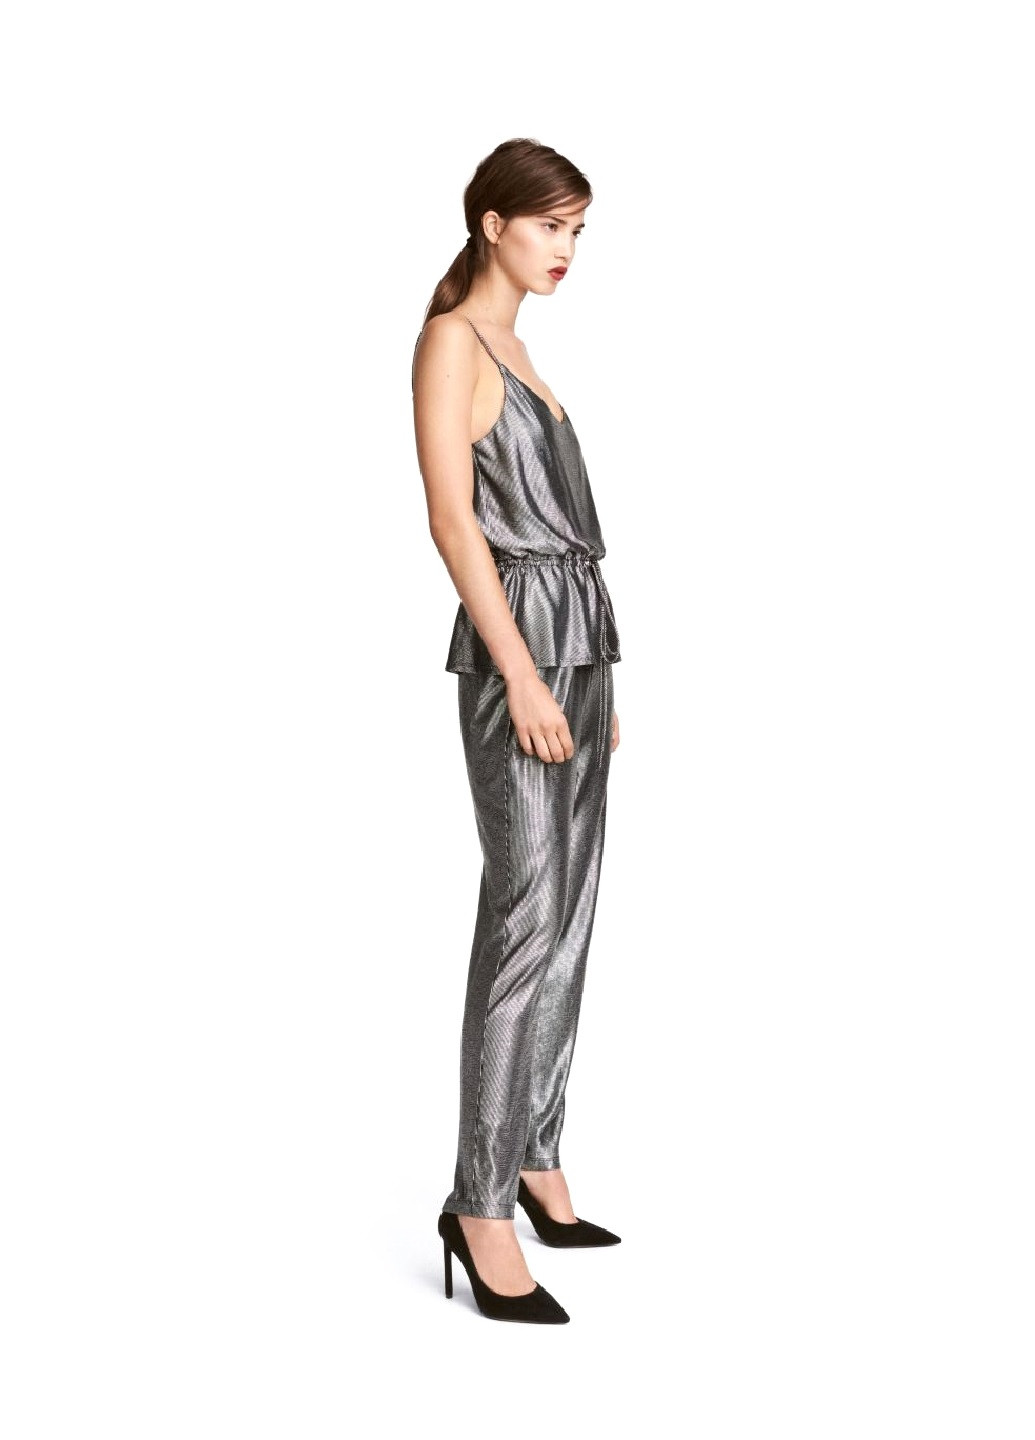 Комбинезон H&M комбинезон-брюки полоска серый кэжуал трикотаж, полиэстер